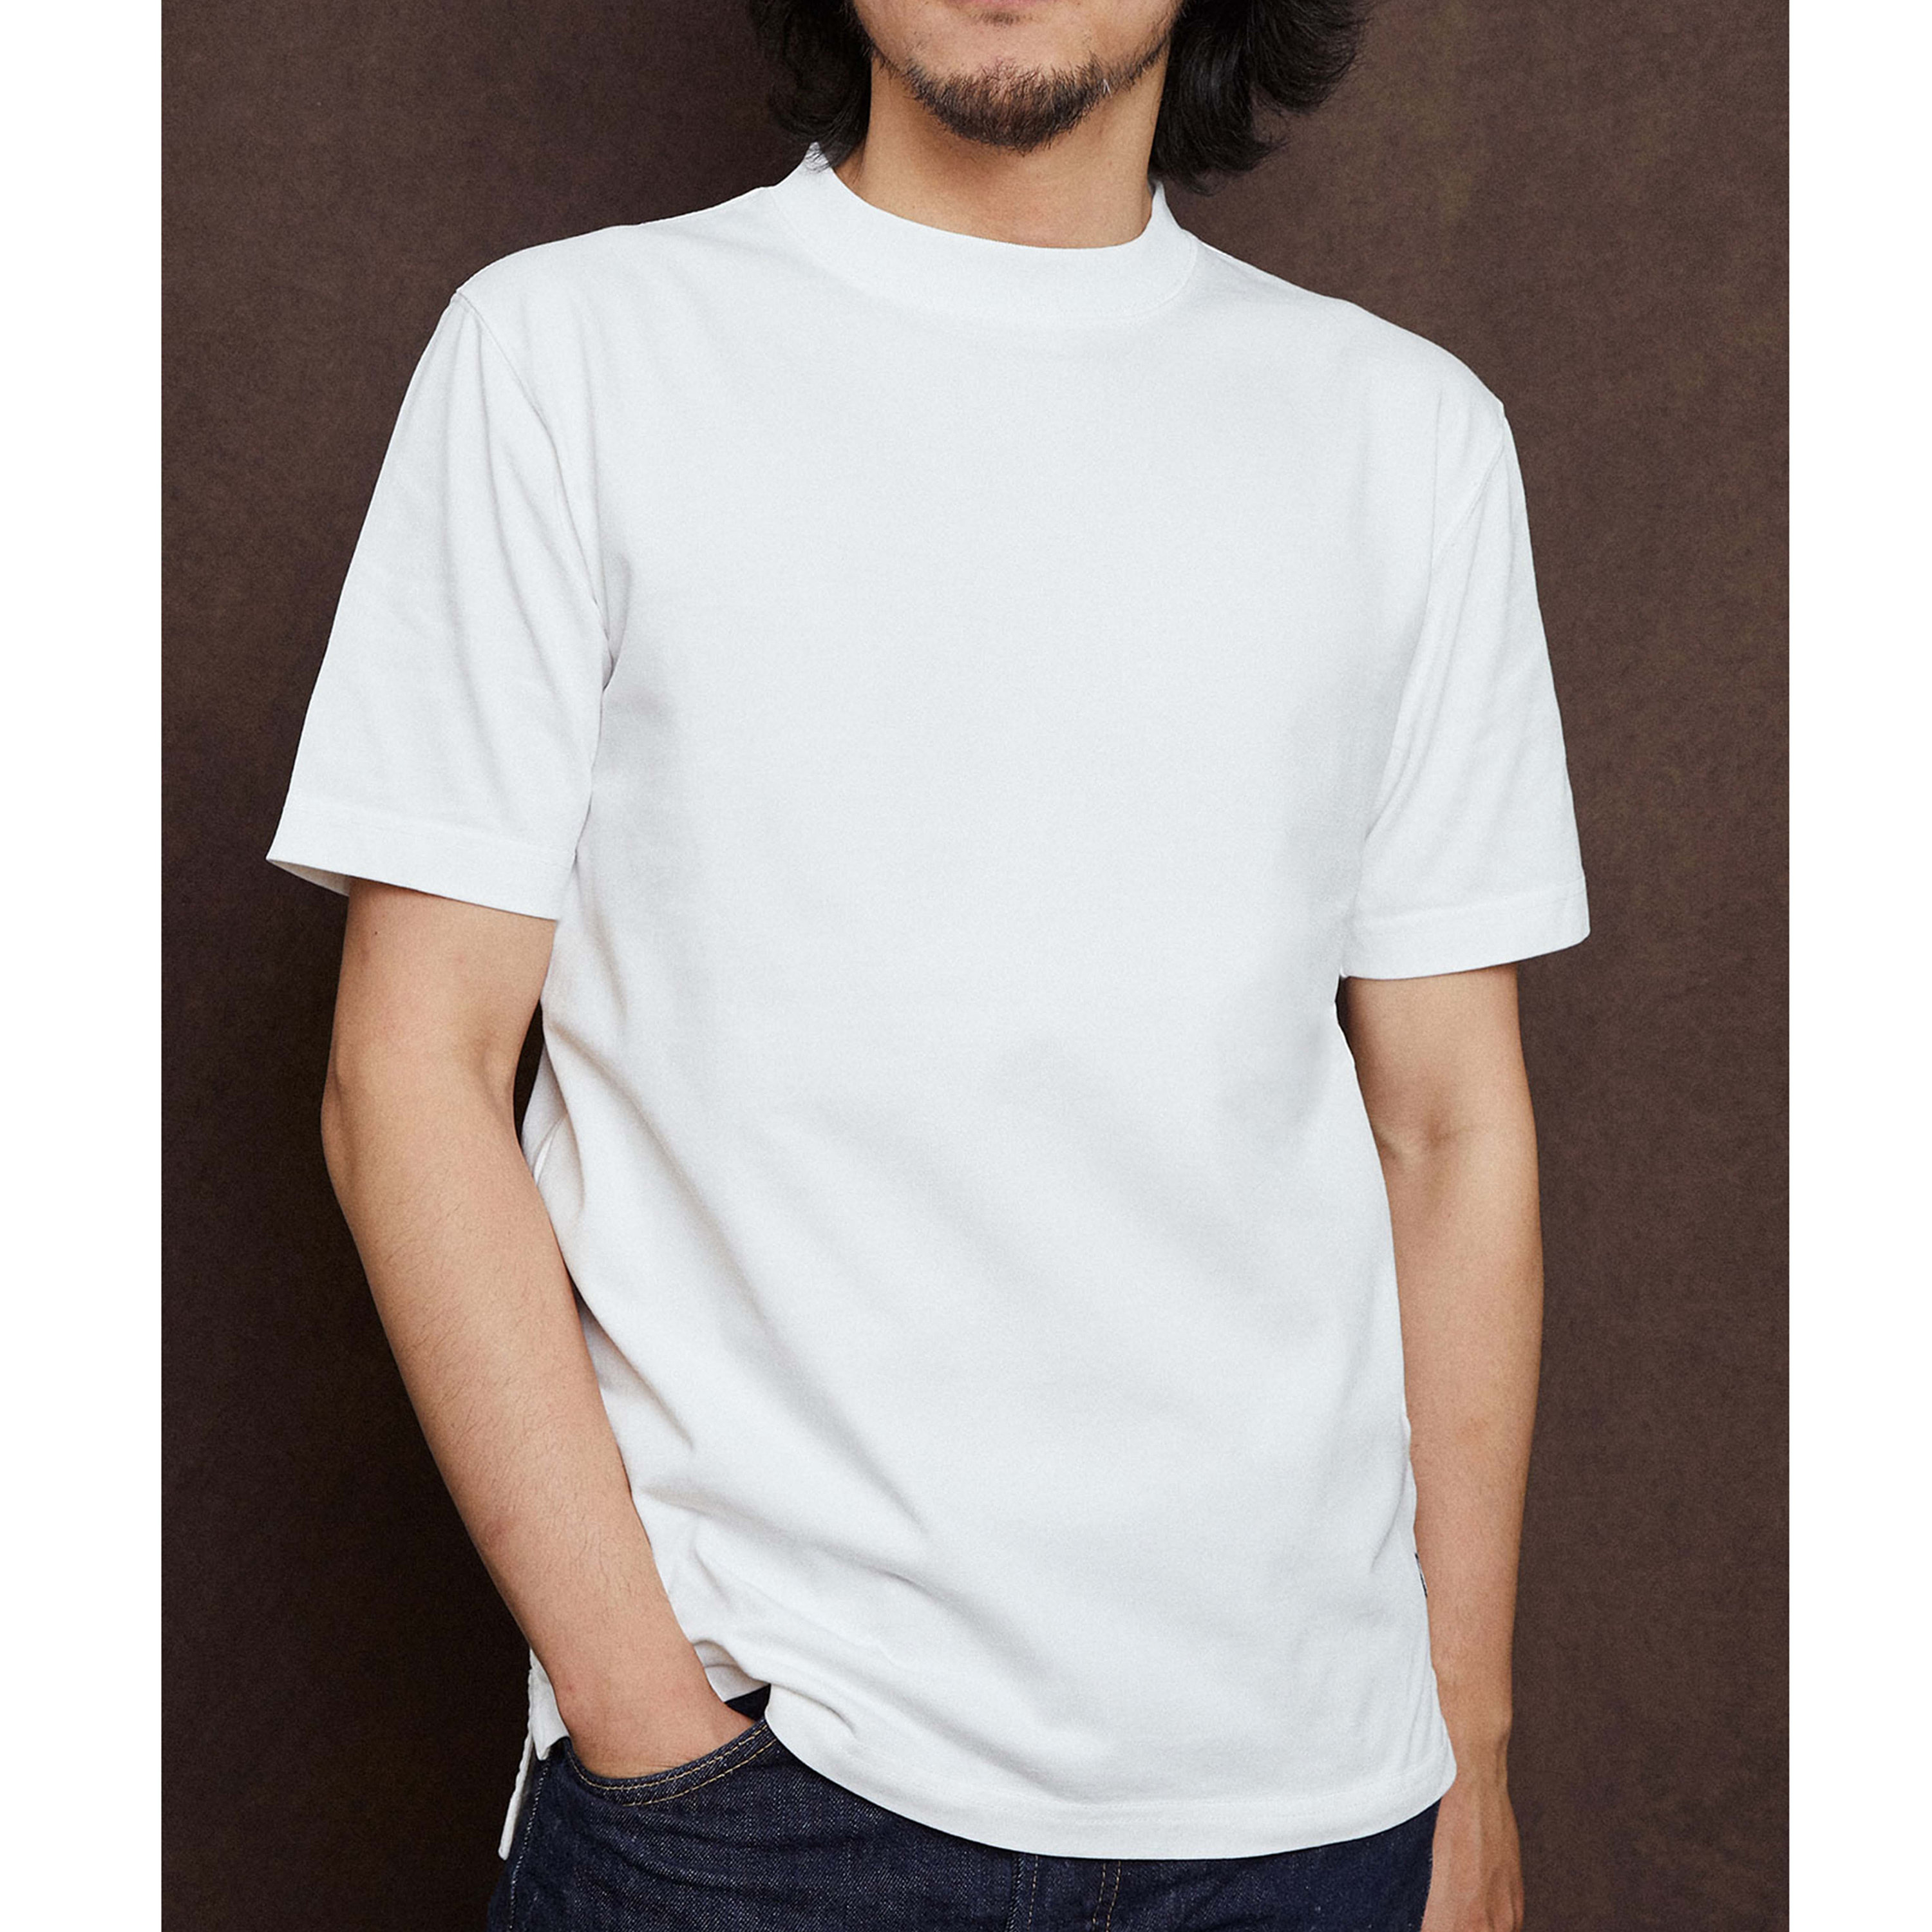 Buy Nalayak apparel Mc Stan Tshirt for Men 100% Cotton t-Shirt